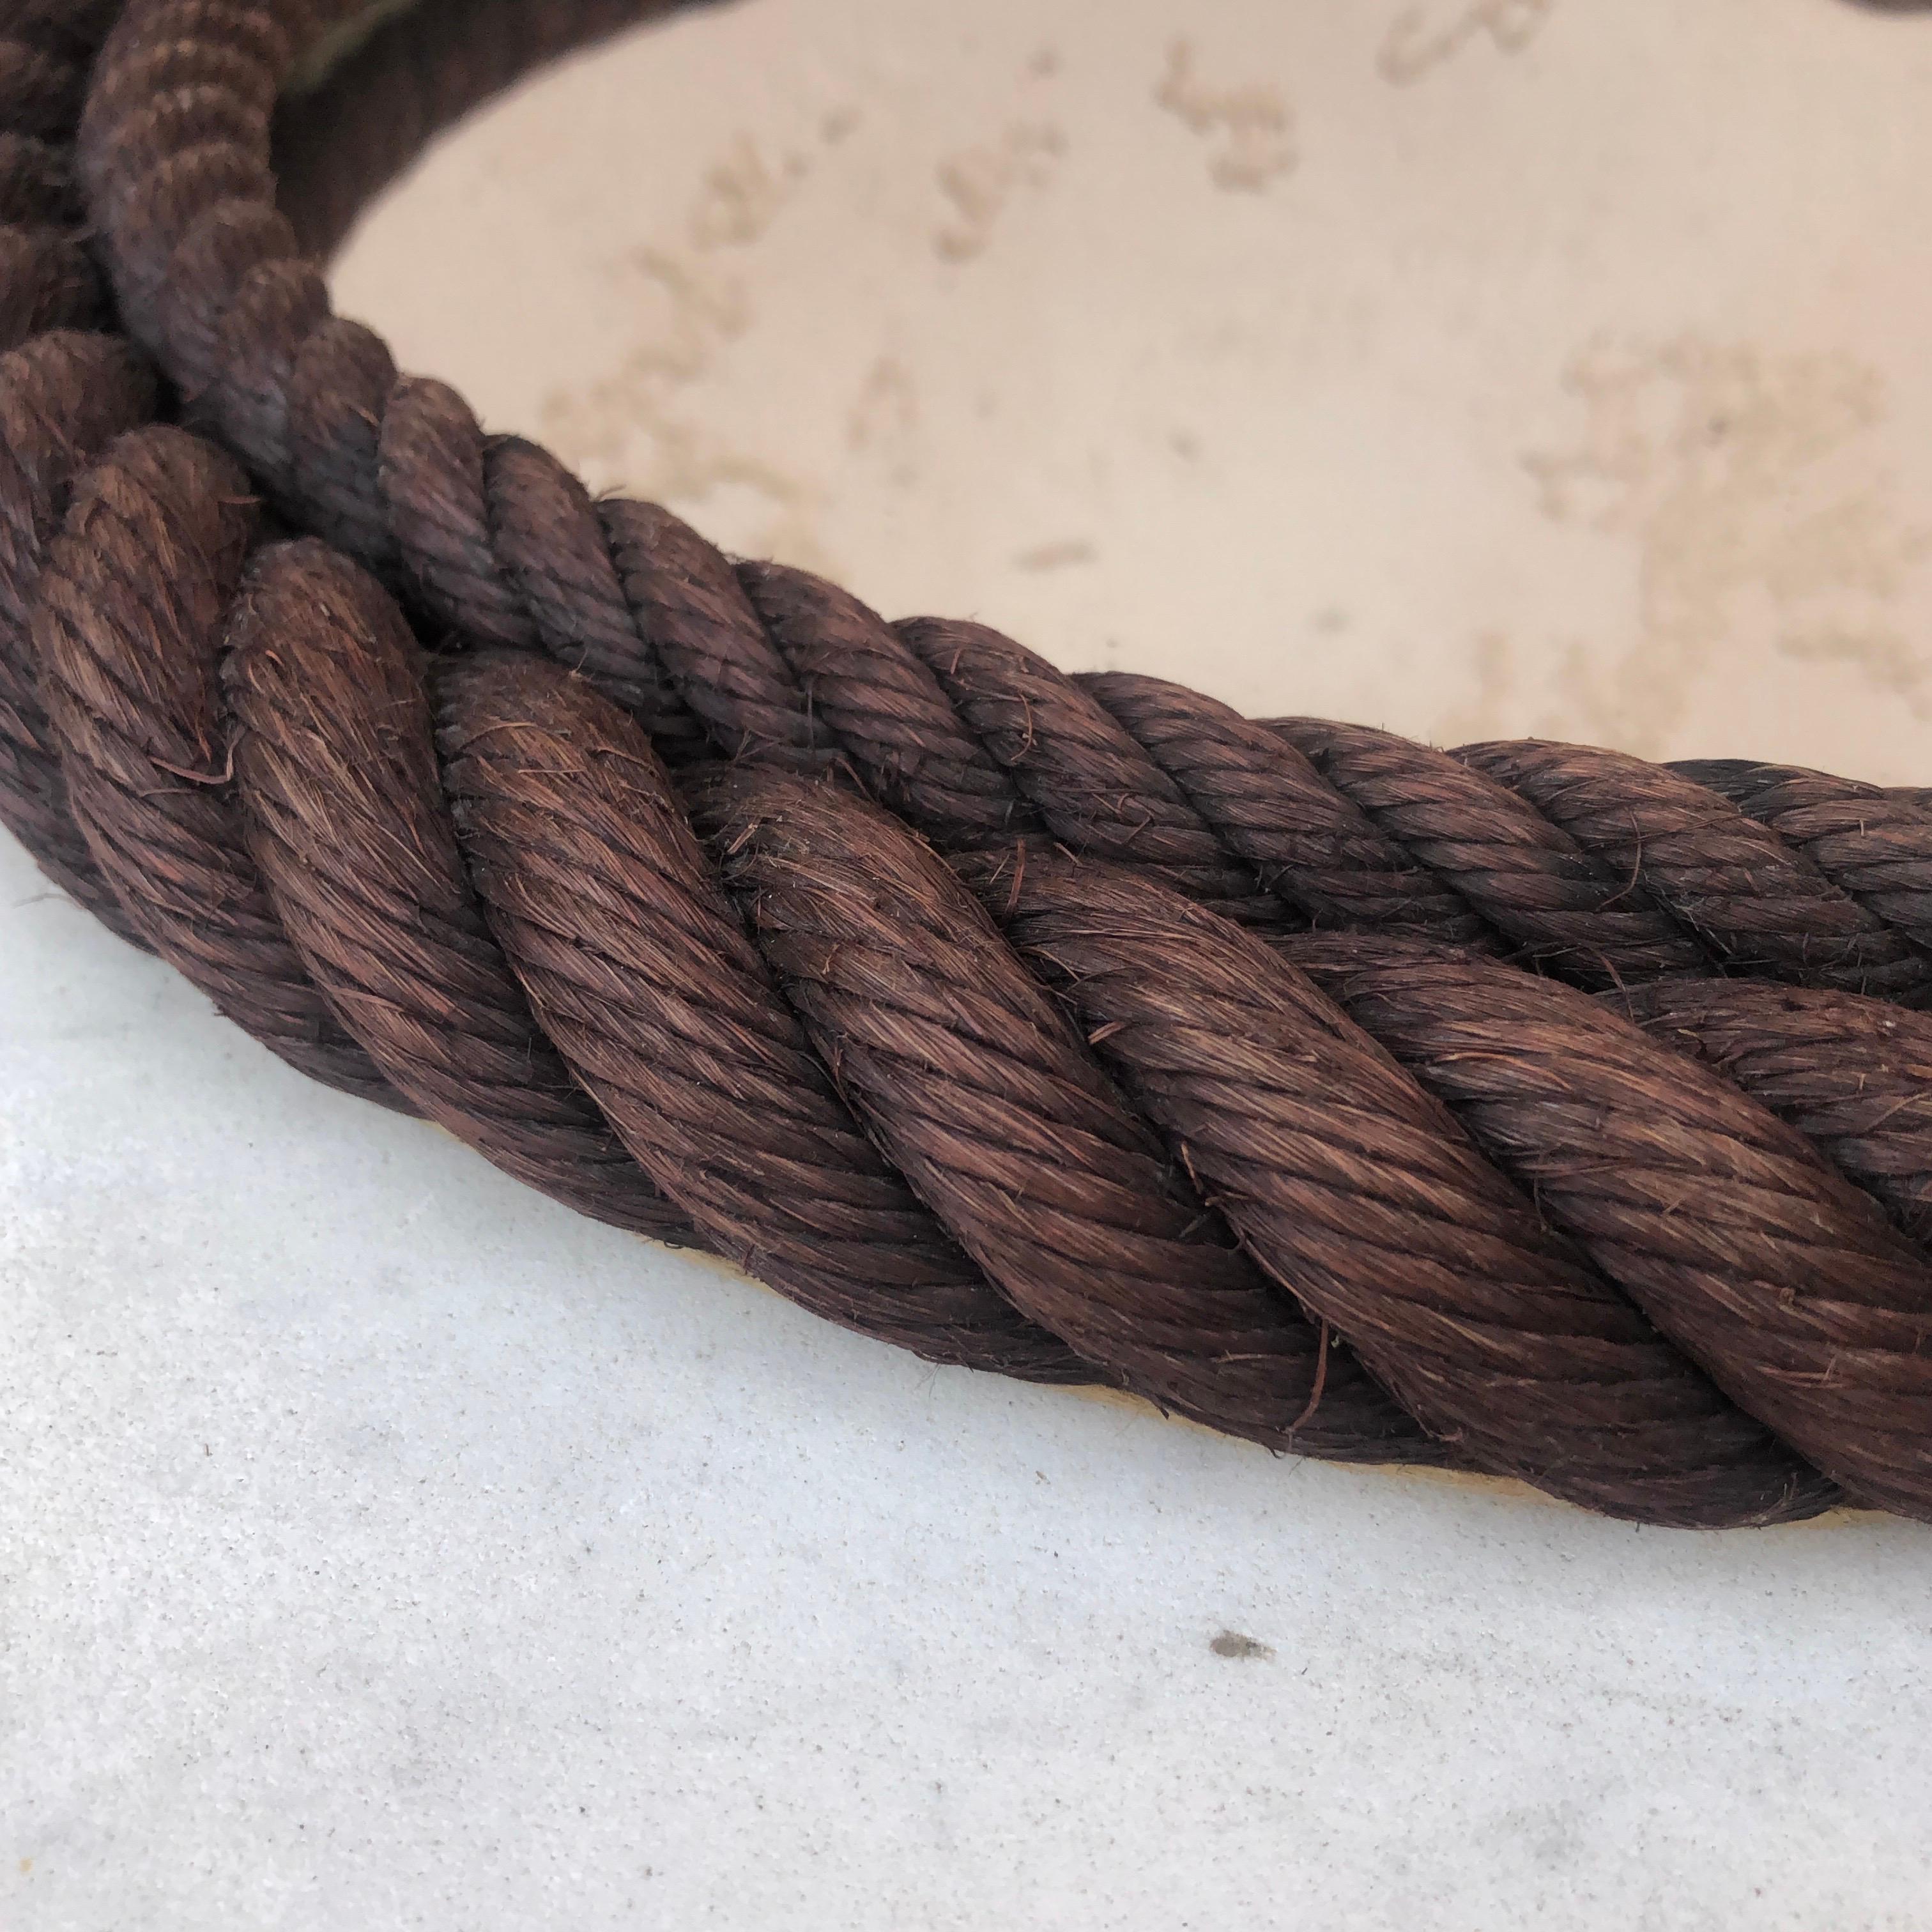 Round nautical rope mirror Audoux Minet, circa 1960.
Rare dark brown color.
Size: 15 inches diameter.